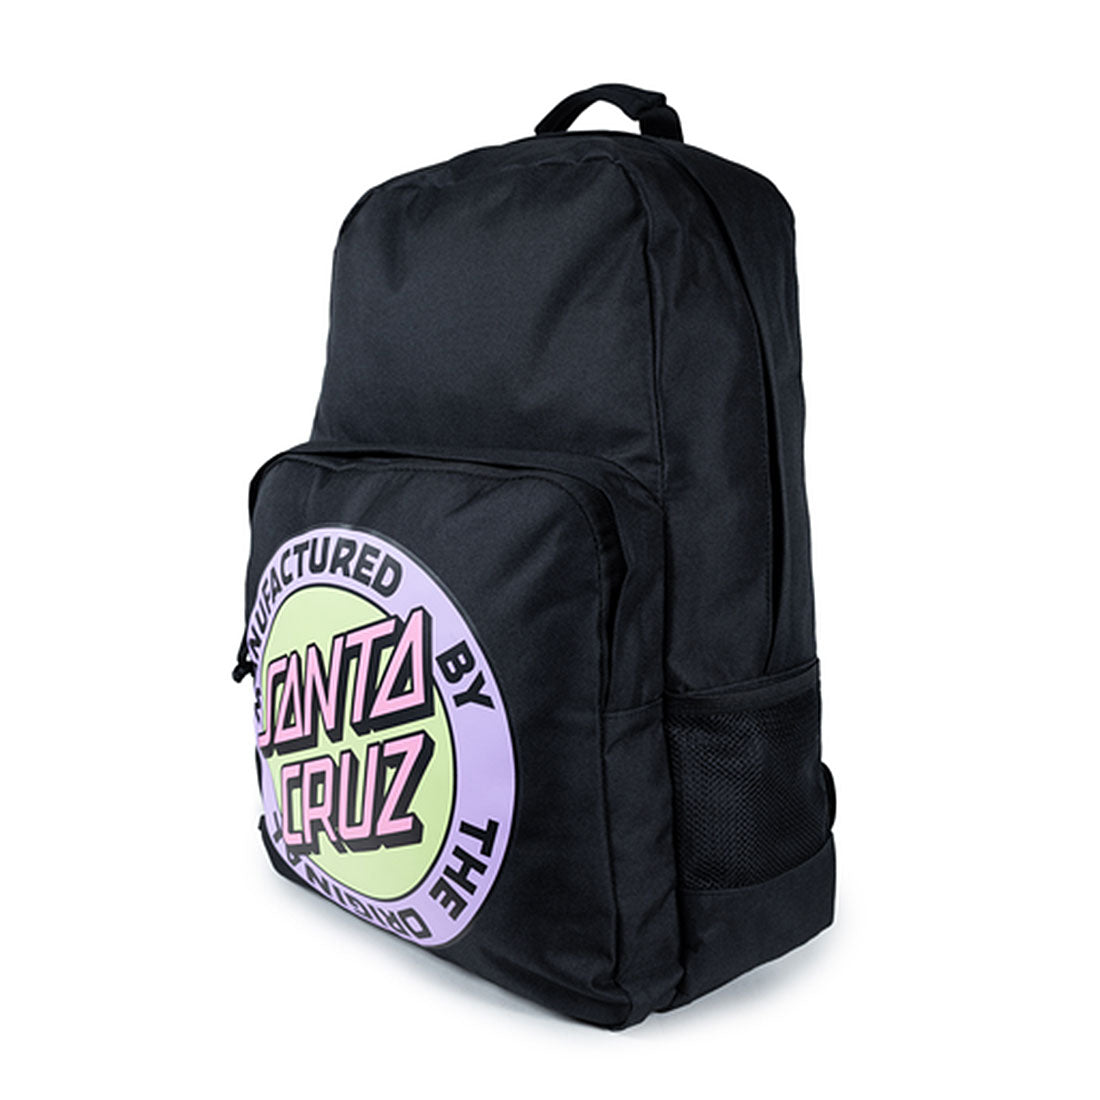 Santa Cruz MFG Retro Dot Backpack - Black Bags and Backpacks